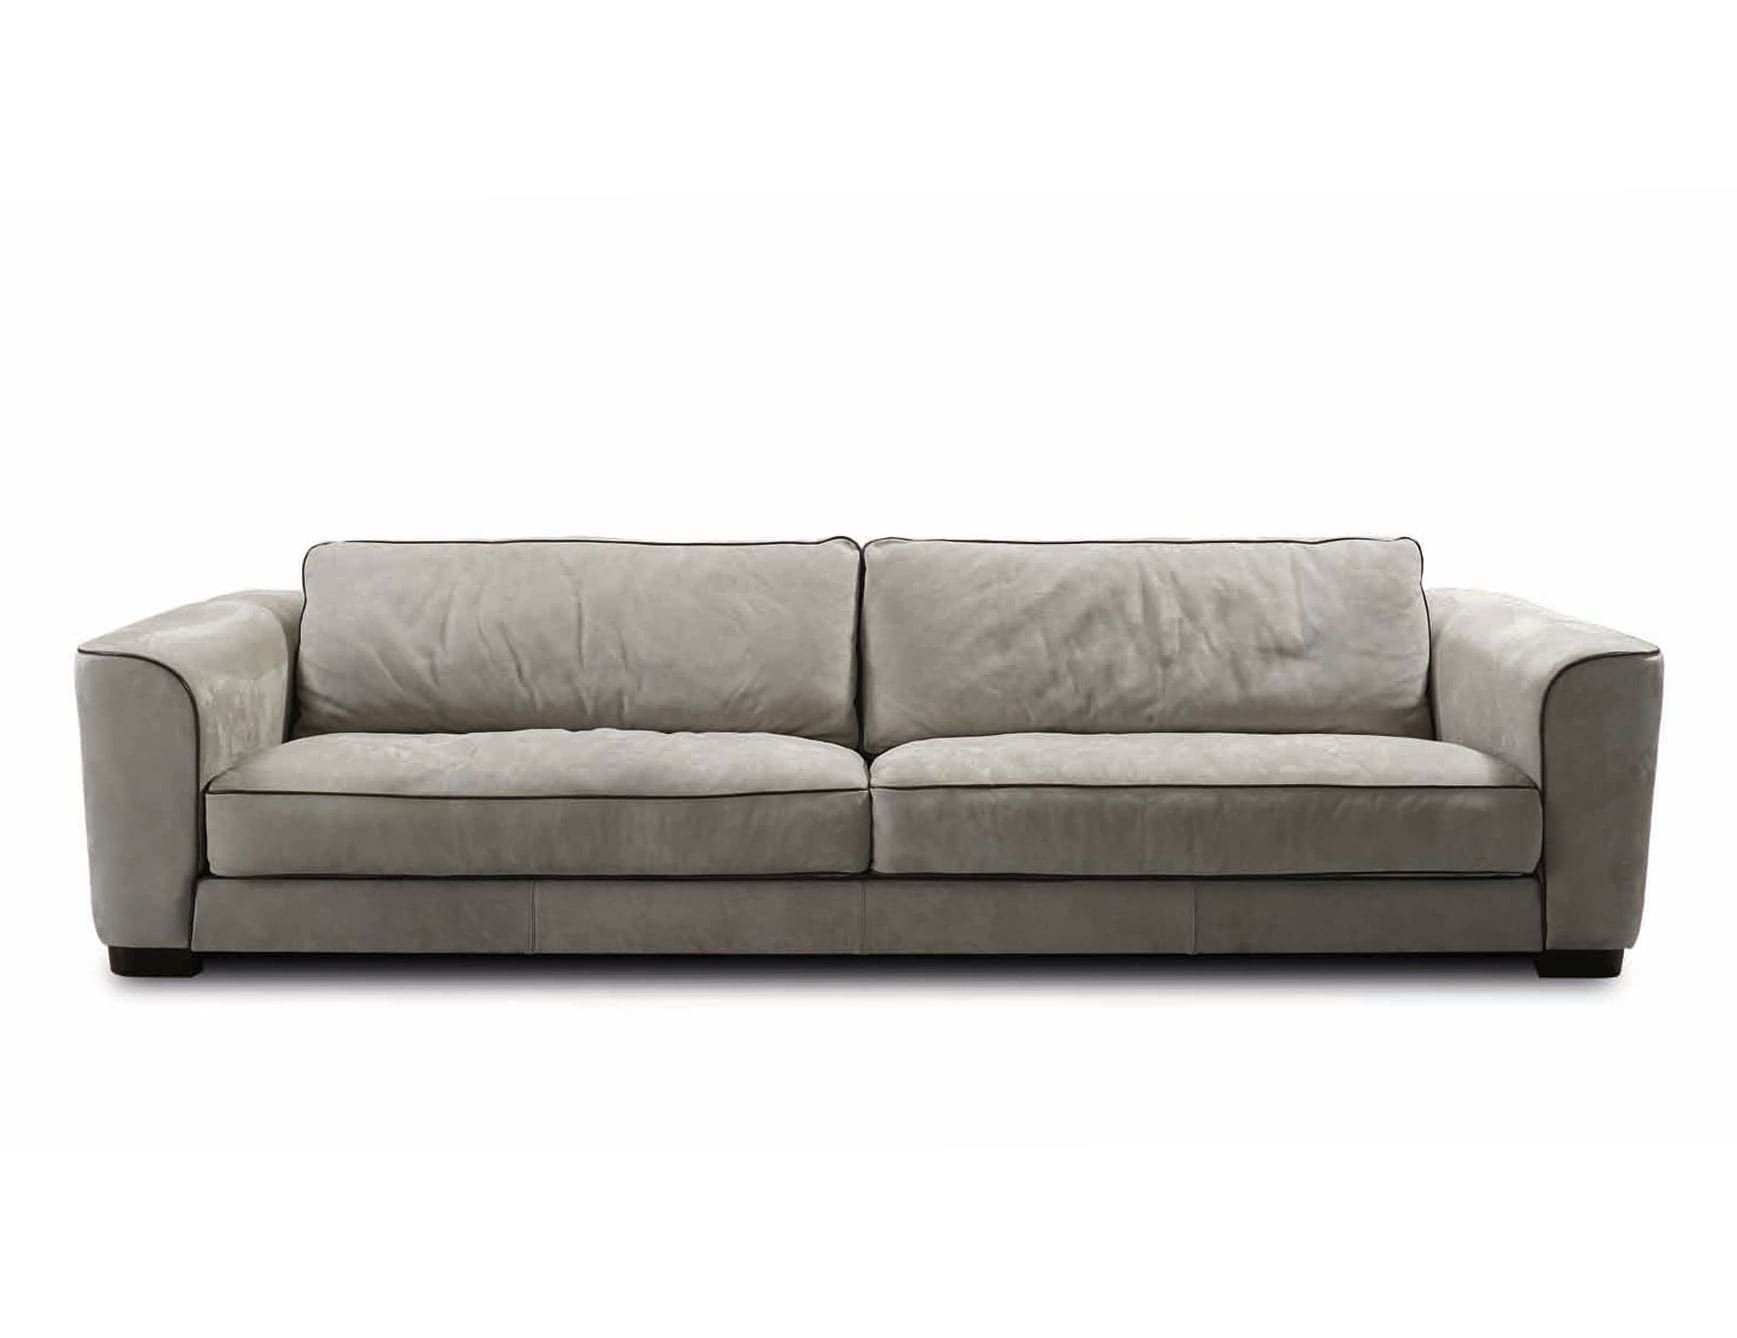 Max modern Italian sofa chair with grey leather